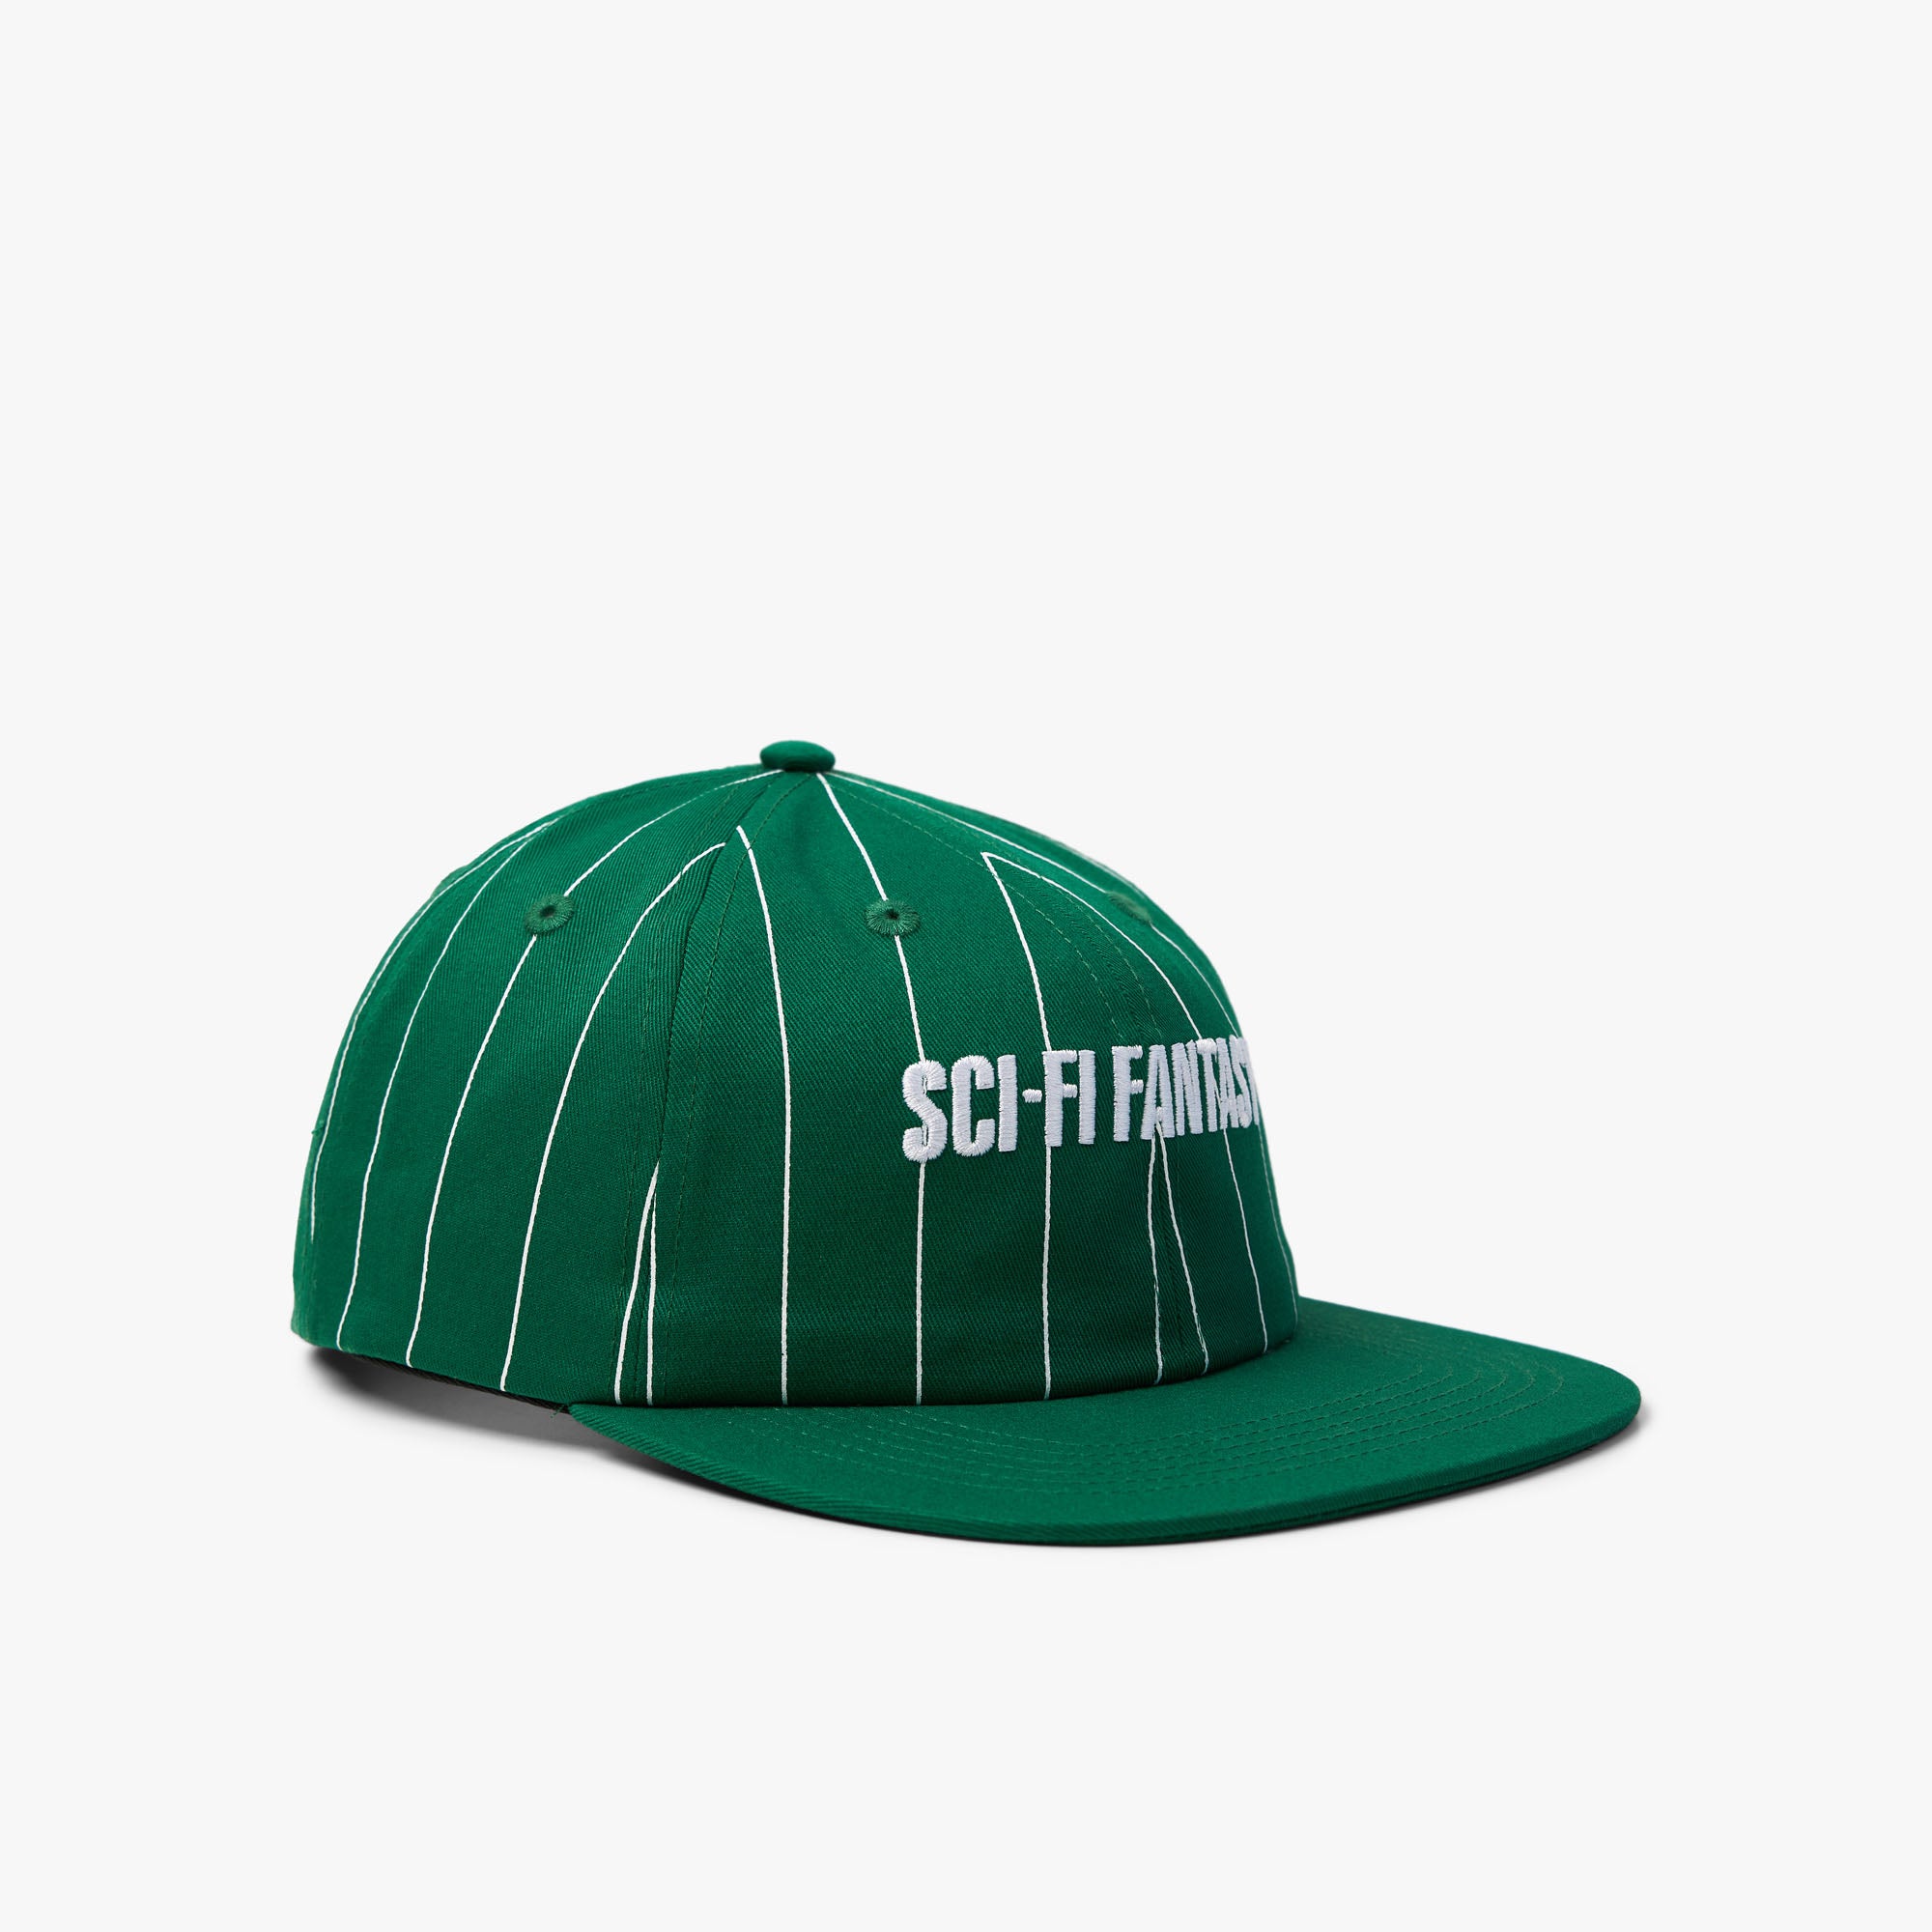 Sci-Fi Fantasy Fast Stripe Hat / Green 1